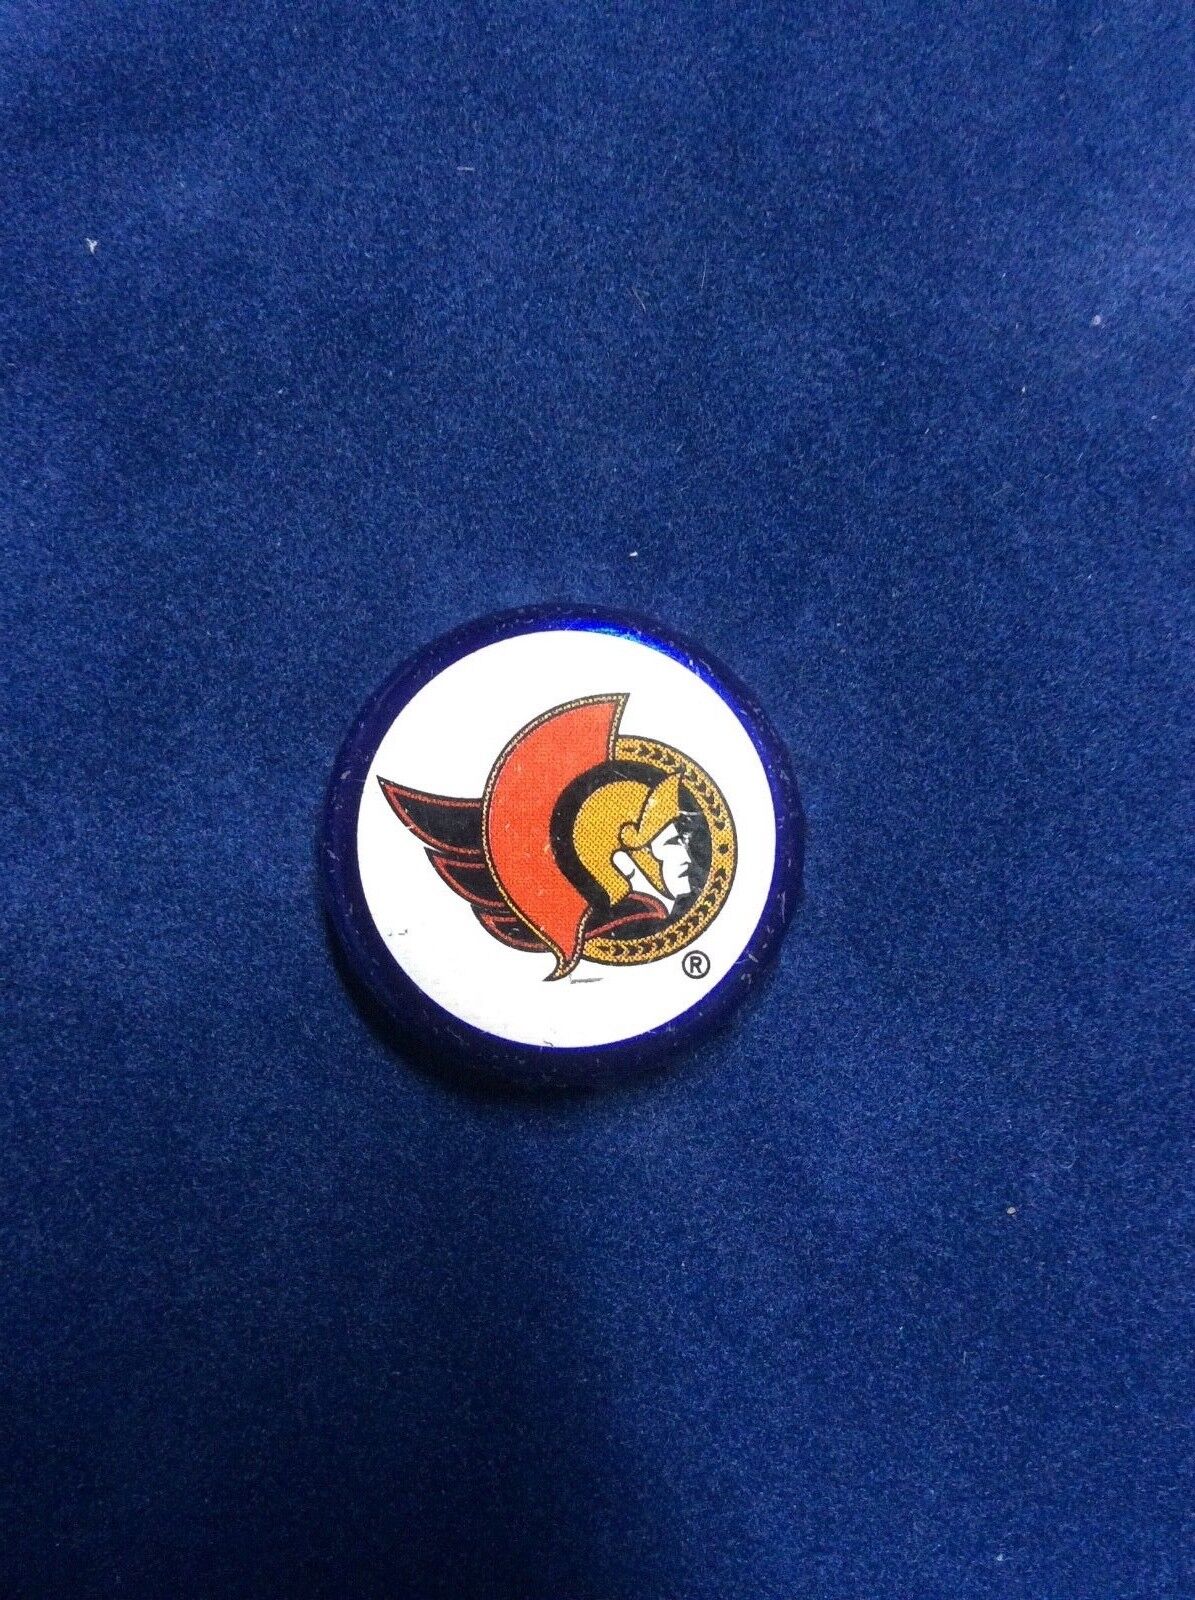 Ottawa Senators Limited Edition NHL Beer Cap Labatts Beer 2001